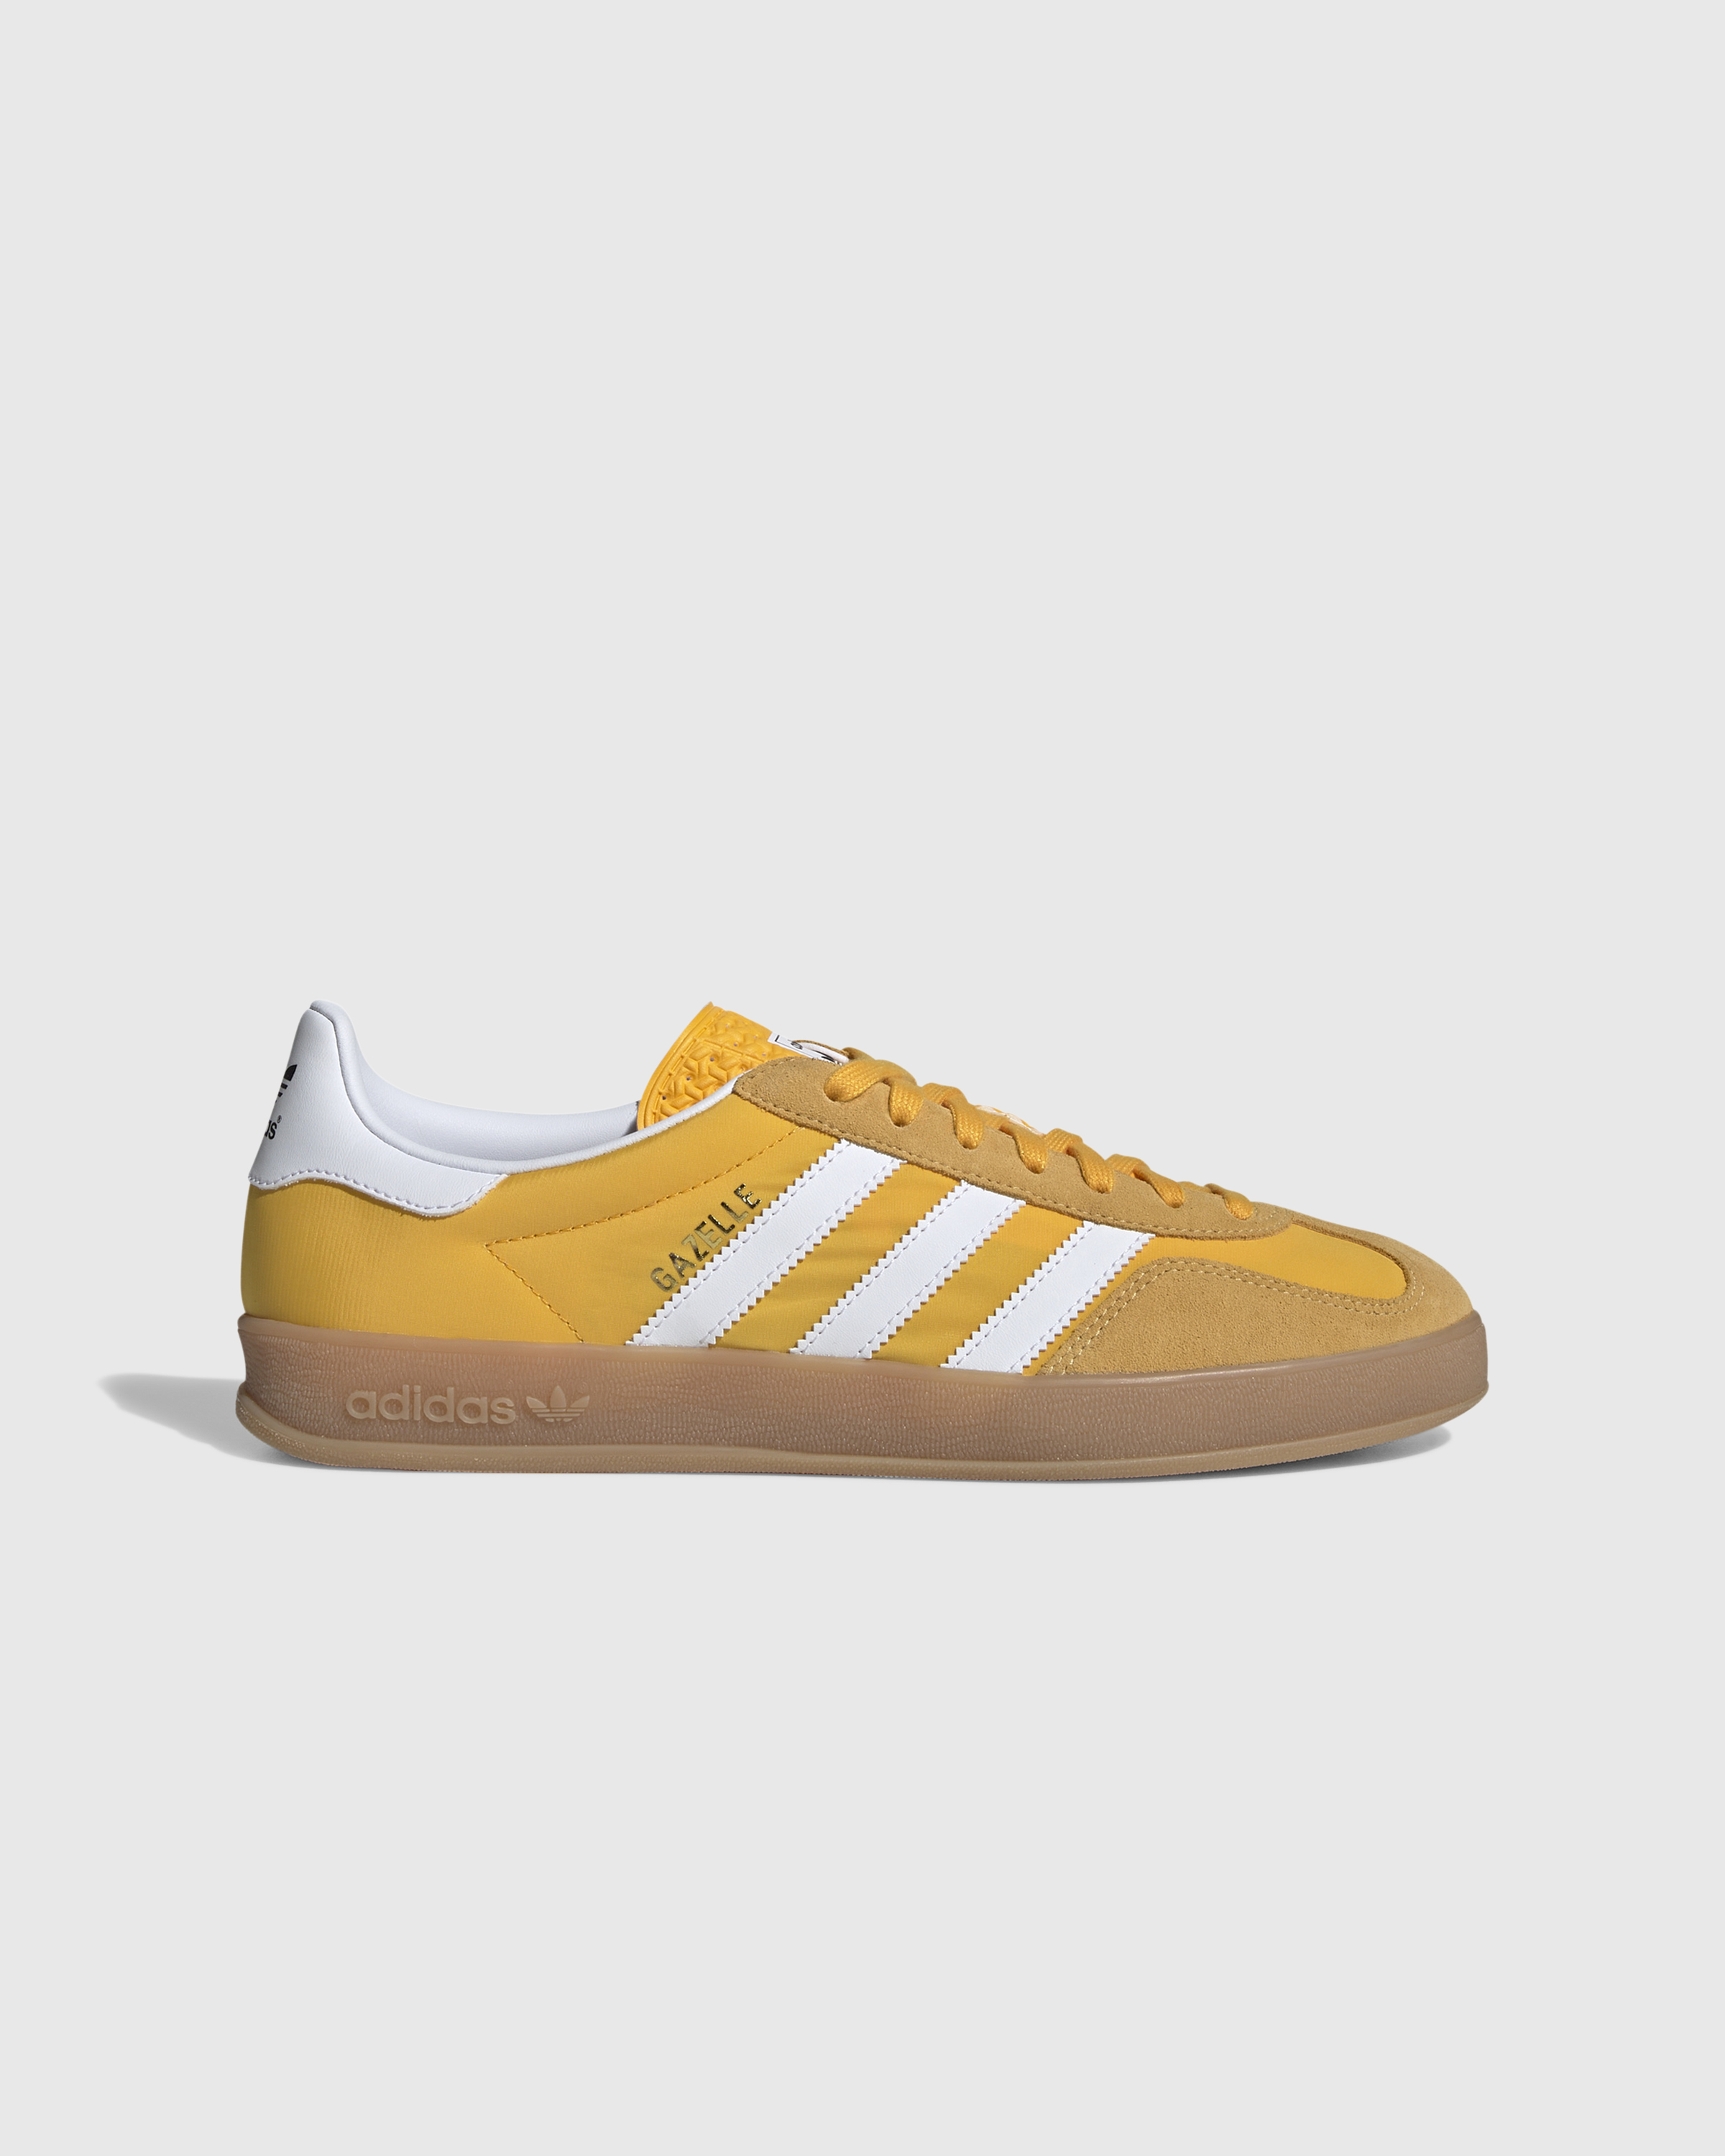 Adidas – Gazelle Indoor Yellow/White - Low Top Sneakers - Yellow - Image 1